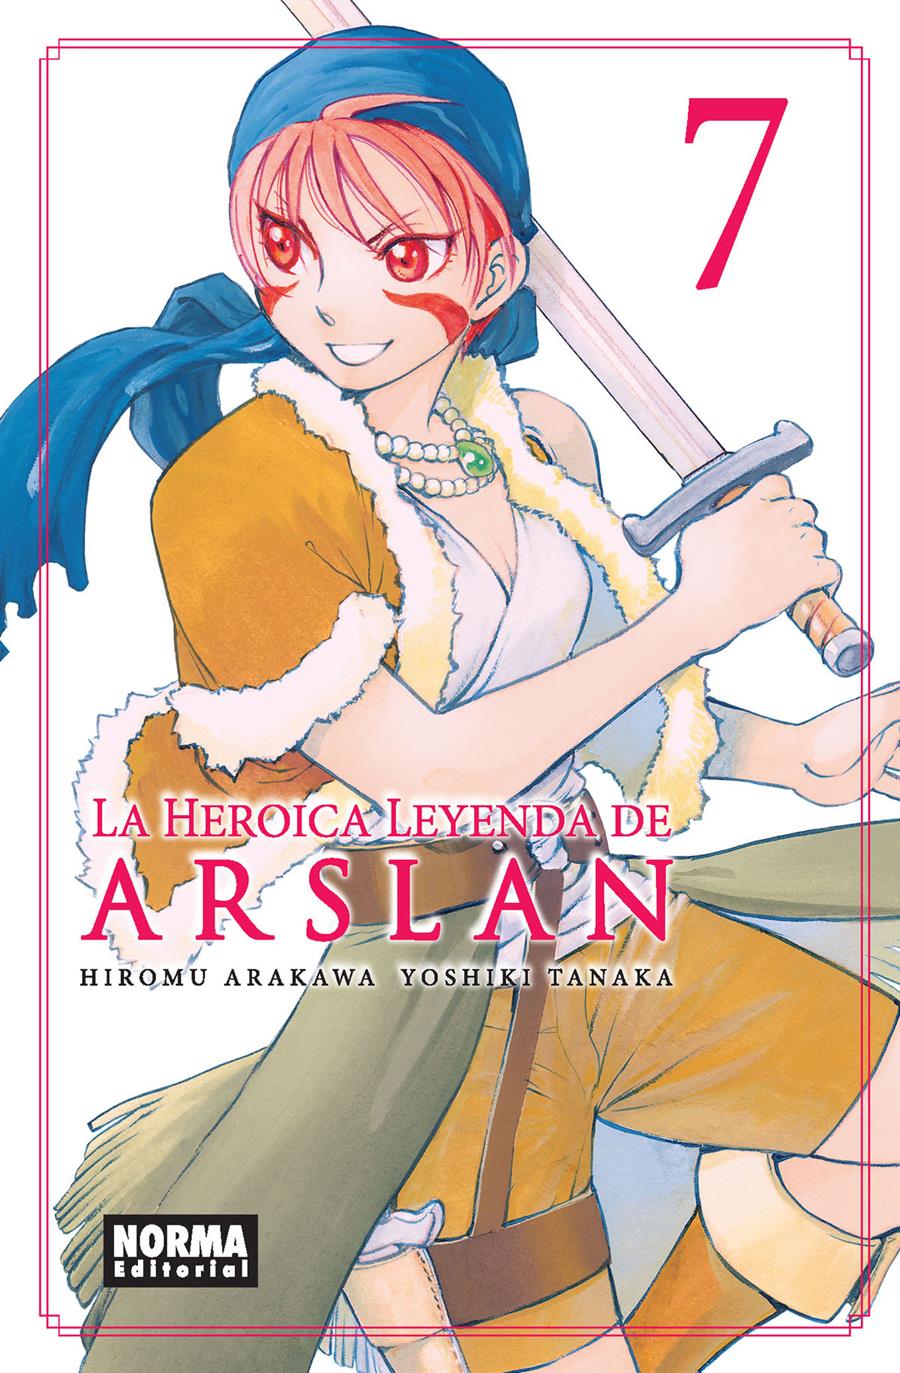 La Heroica Leyenda de Arslan 07 | N0418-NOR29 | Yoshiki Tanaka, Hiromu Arakawa | Terra de Còmic - Tu tienda de cómics online especializada en cómics, manga y merchandising